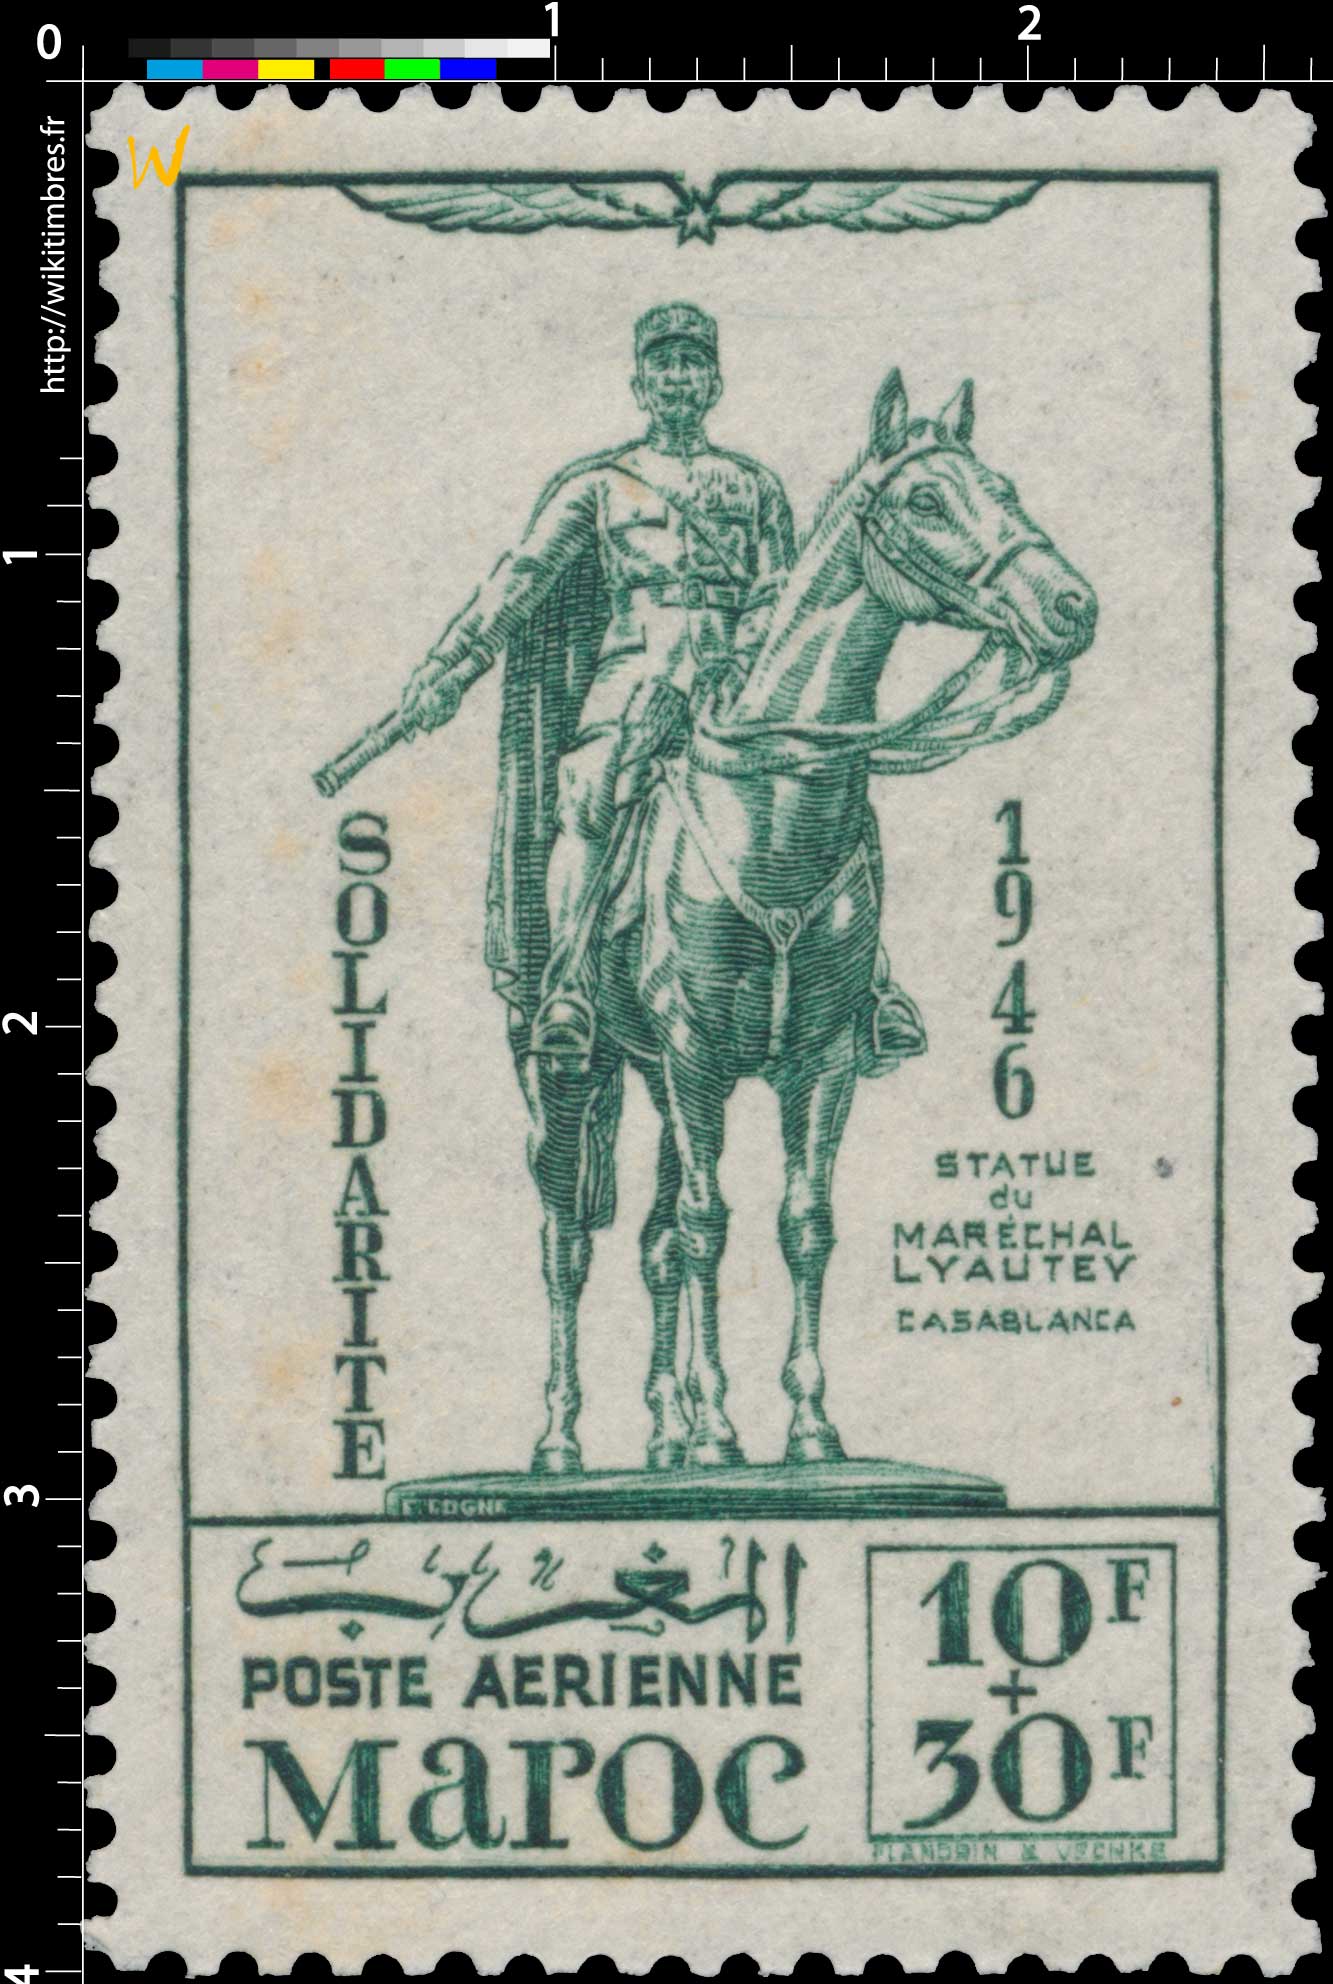 1946 Maroc - Statue du Maréchal Lyautey - Casablanca